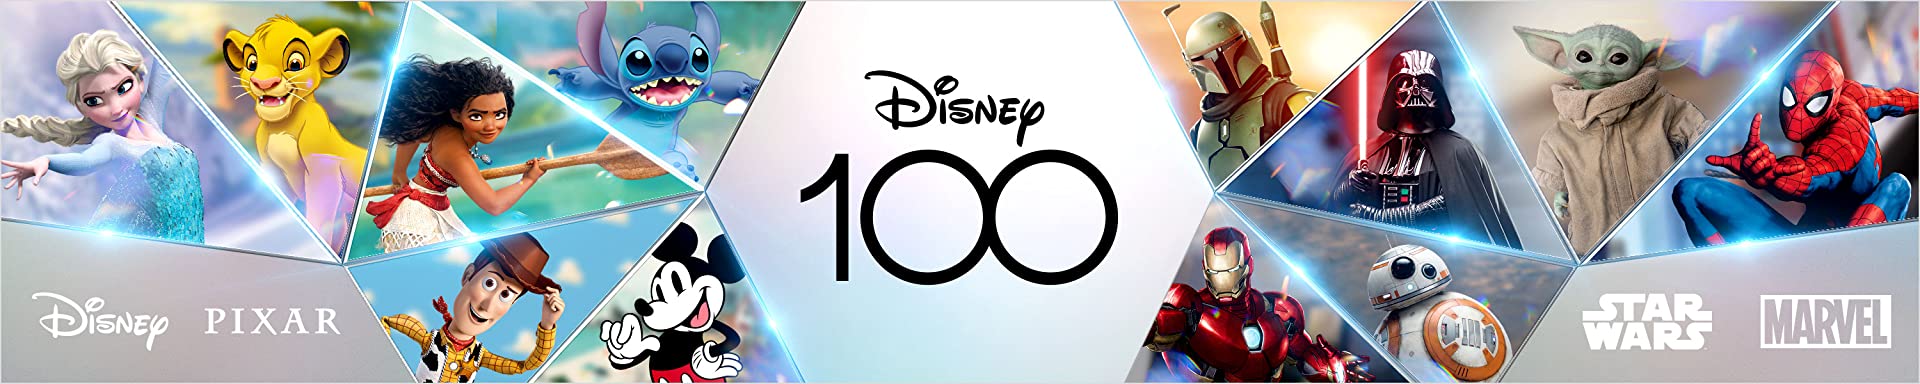 Dinsey 100 Pixar Banner